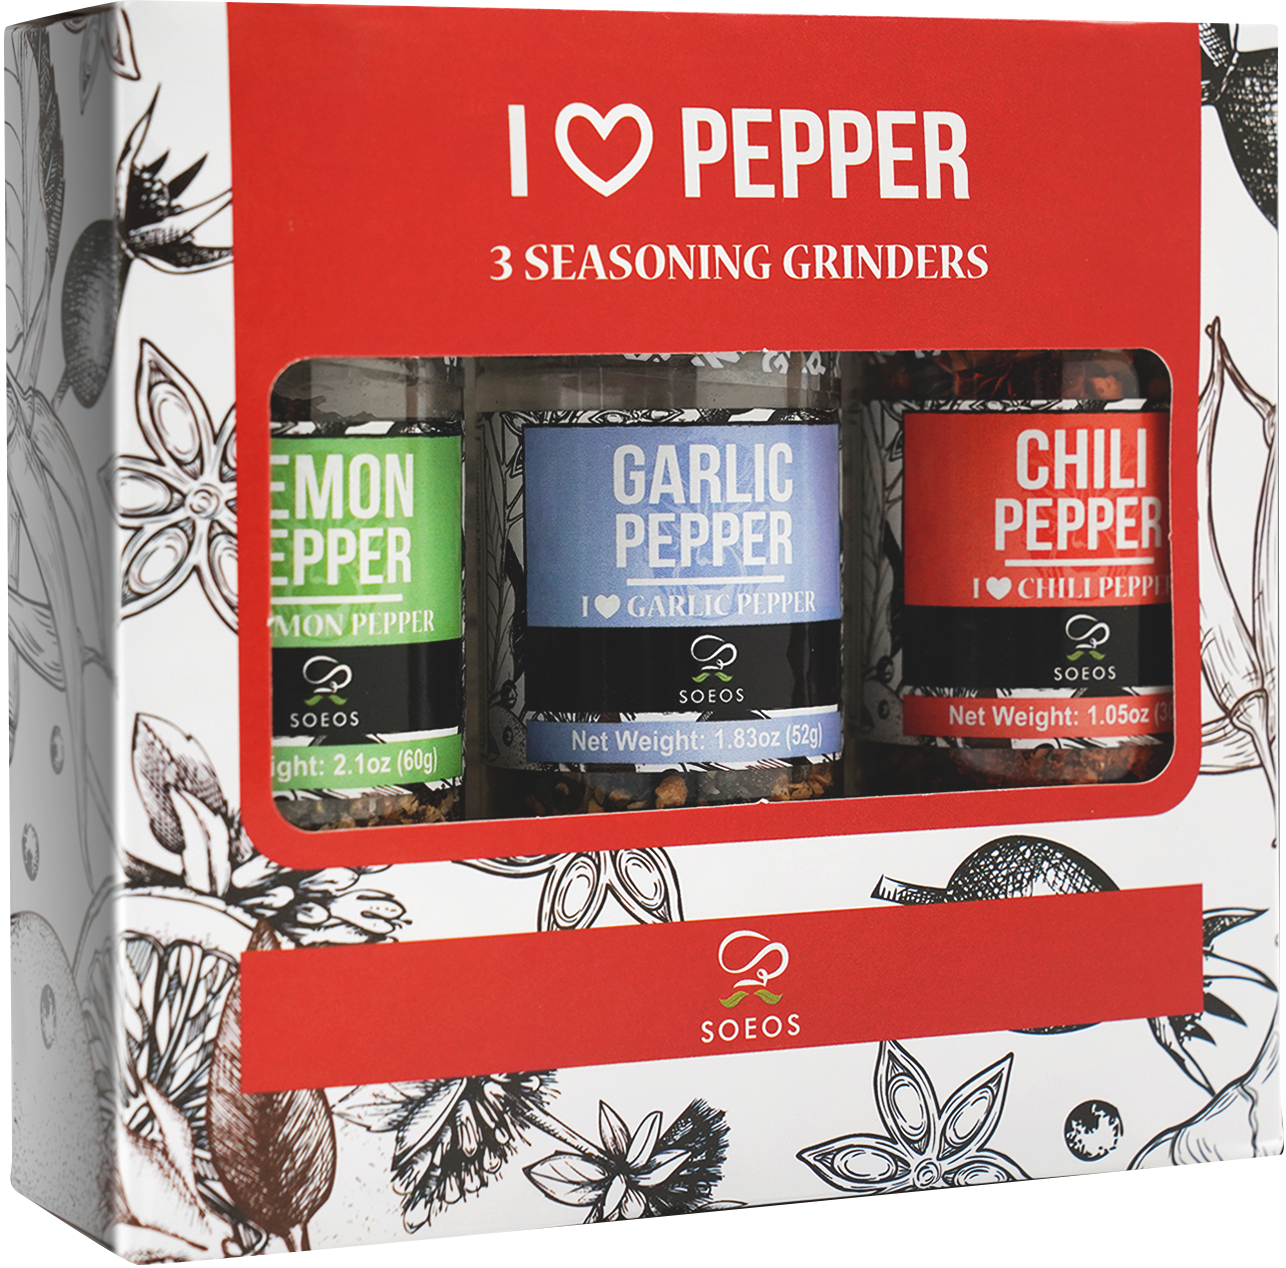 Spice Set of 9 I Love BBQ + Pepper + Garlic Seasoning Set